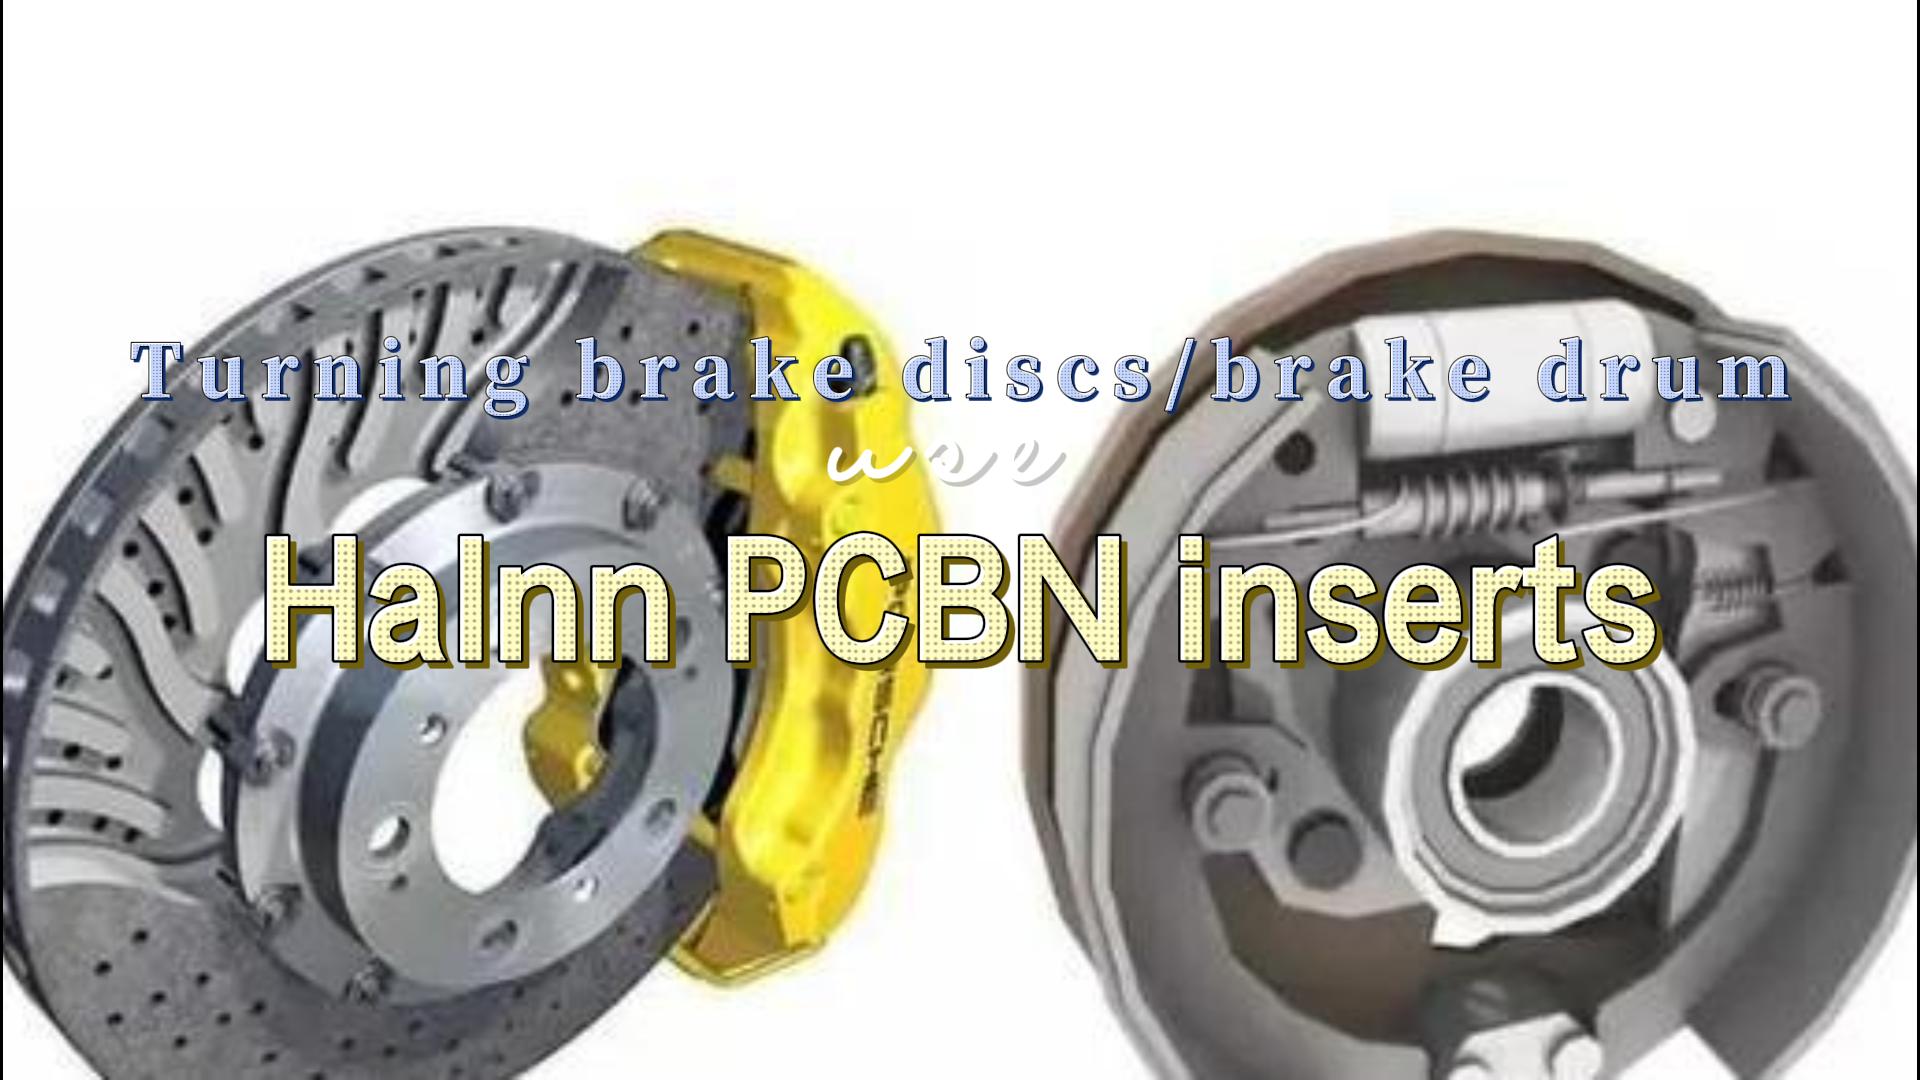 Turning Brake Discs with CBN Tools Video (一) - Basics of Brake Disc and Drum Machining